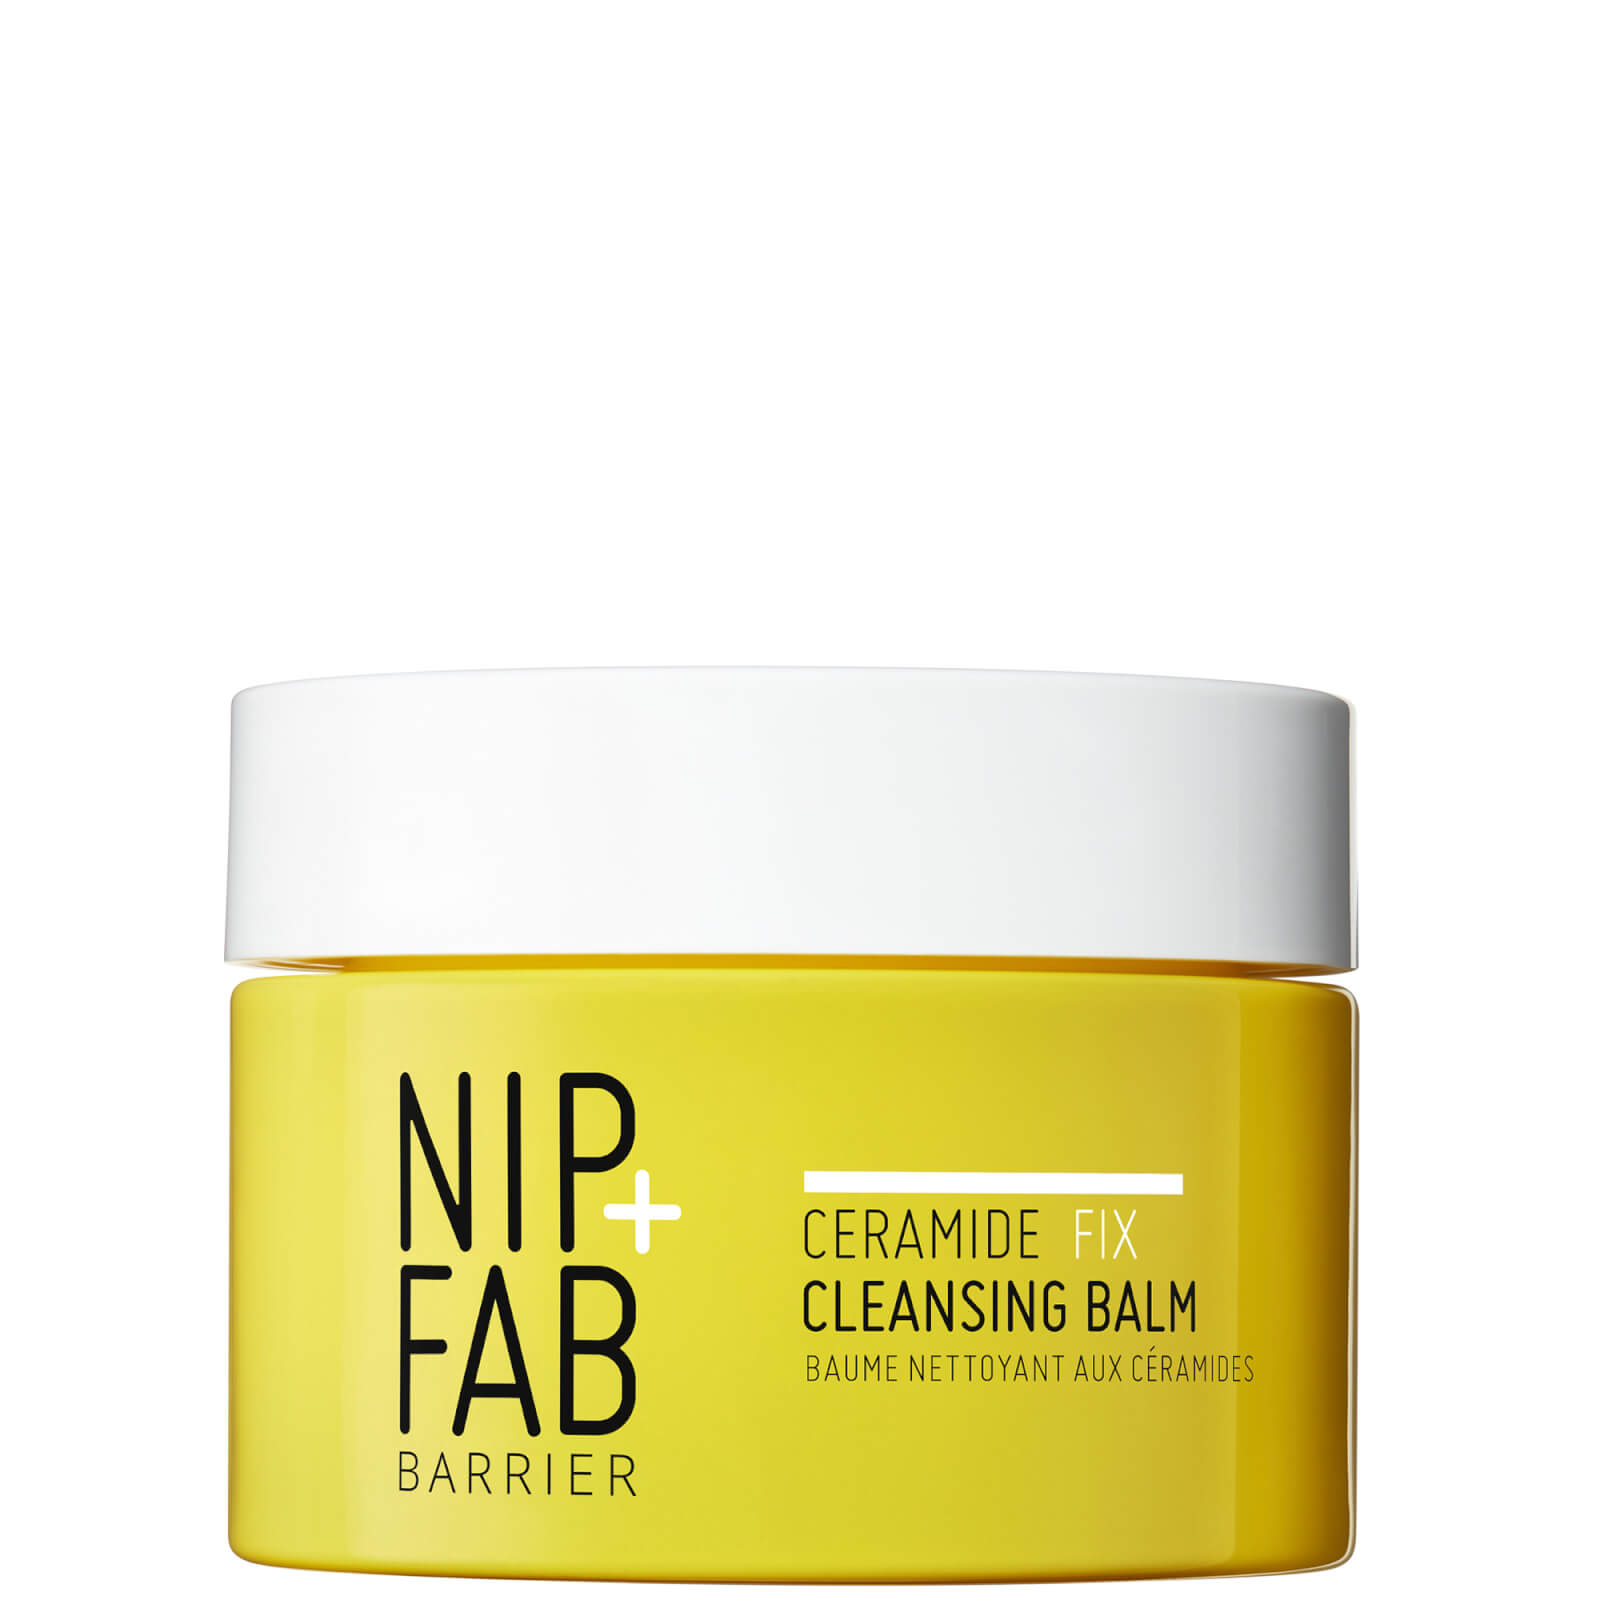 Photos - Facial / Body Cleansing Product NIP+FAB Ceramide Fix Cleansing Balm 75ml SKCERABALM